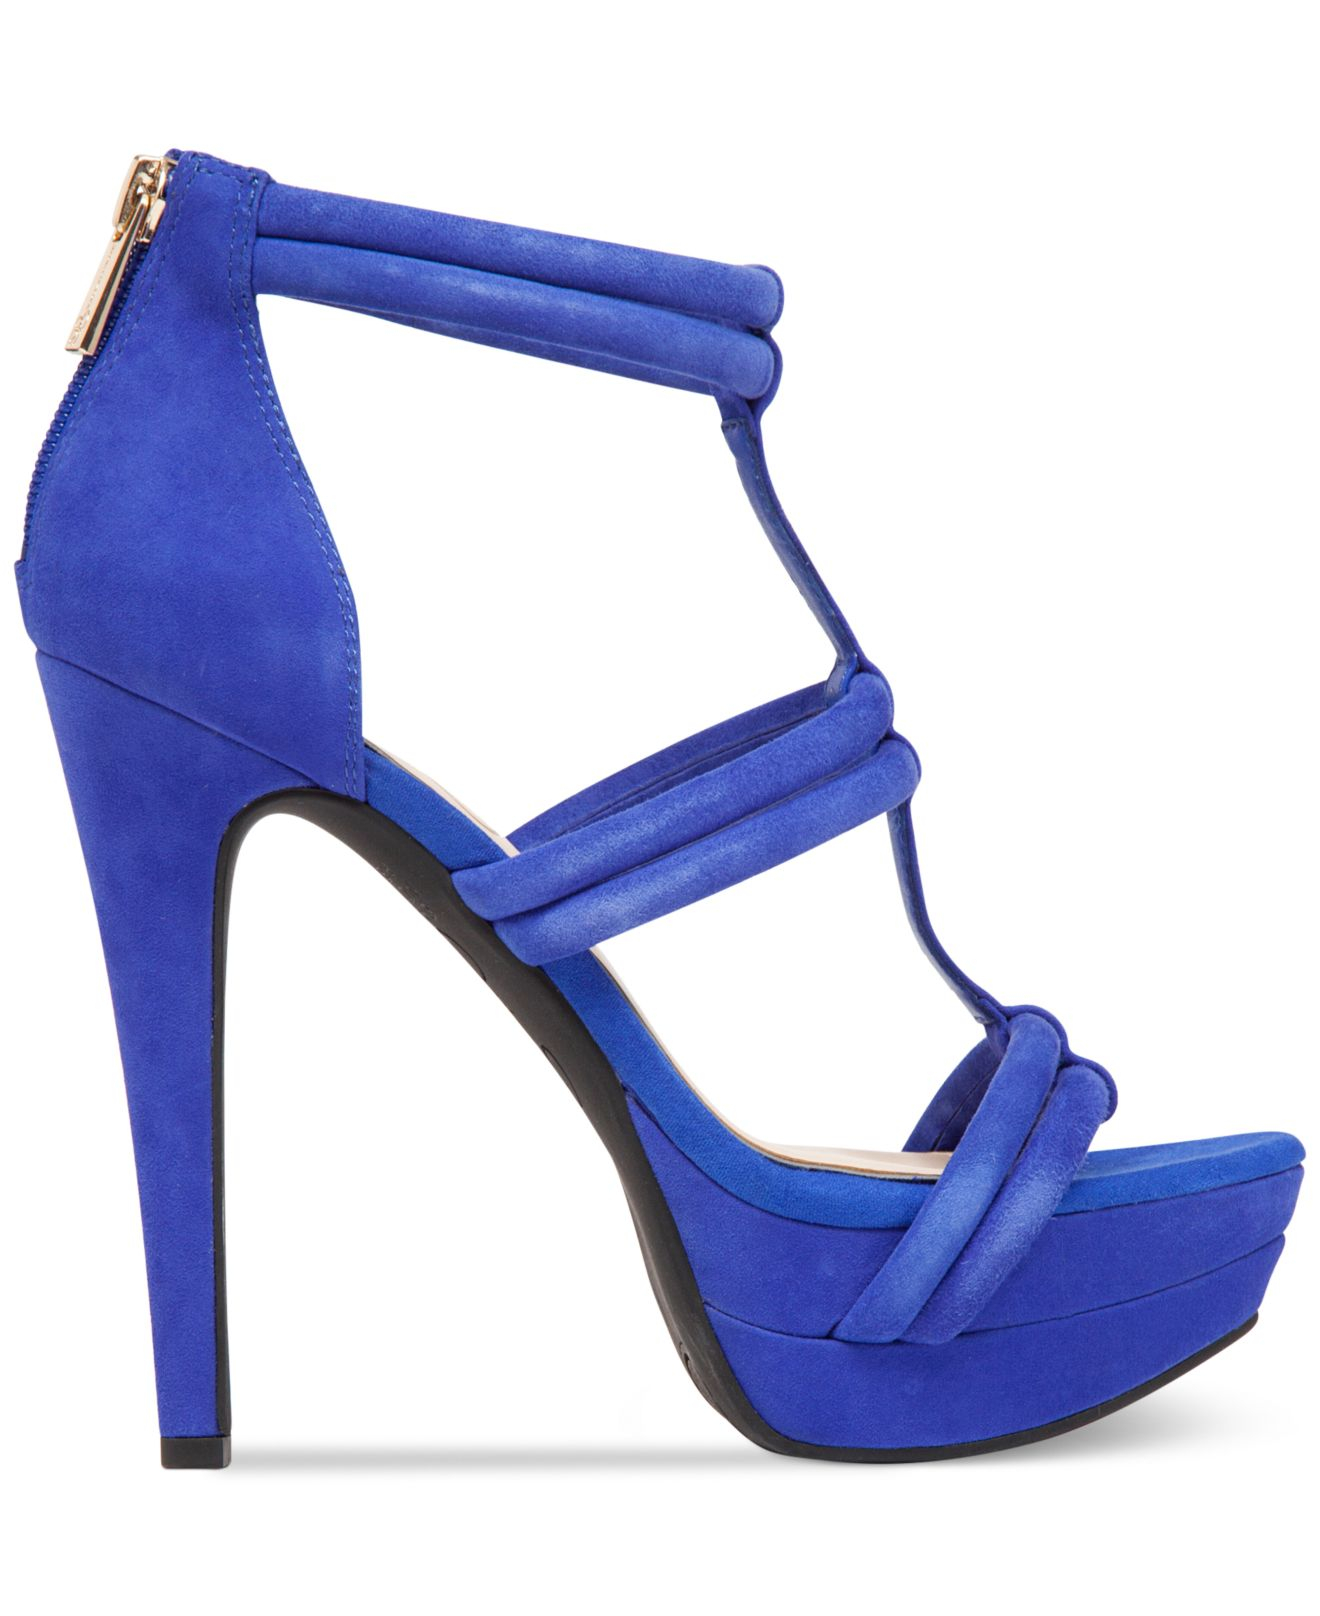 Lyst - Jessica Simpson Solena T-strap Platform Sandals in Blue